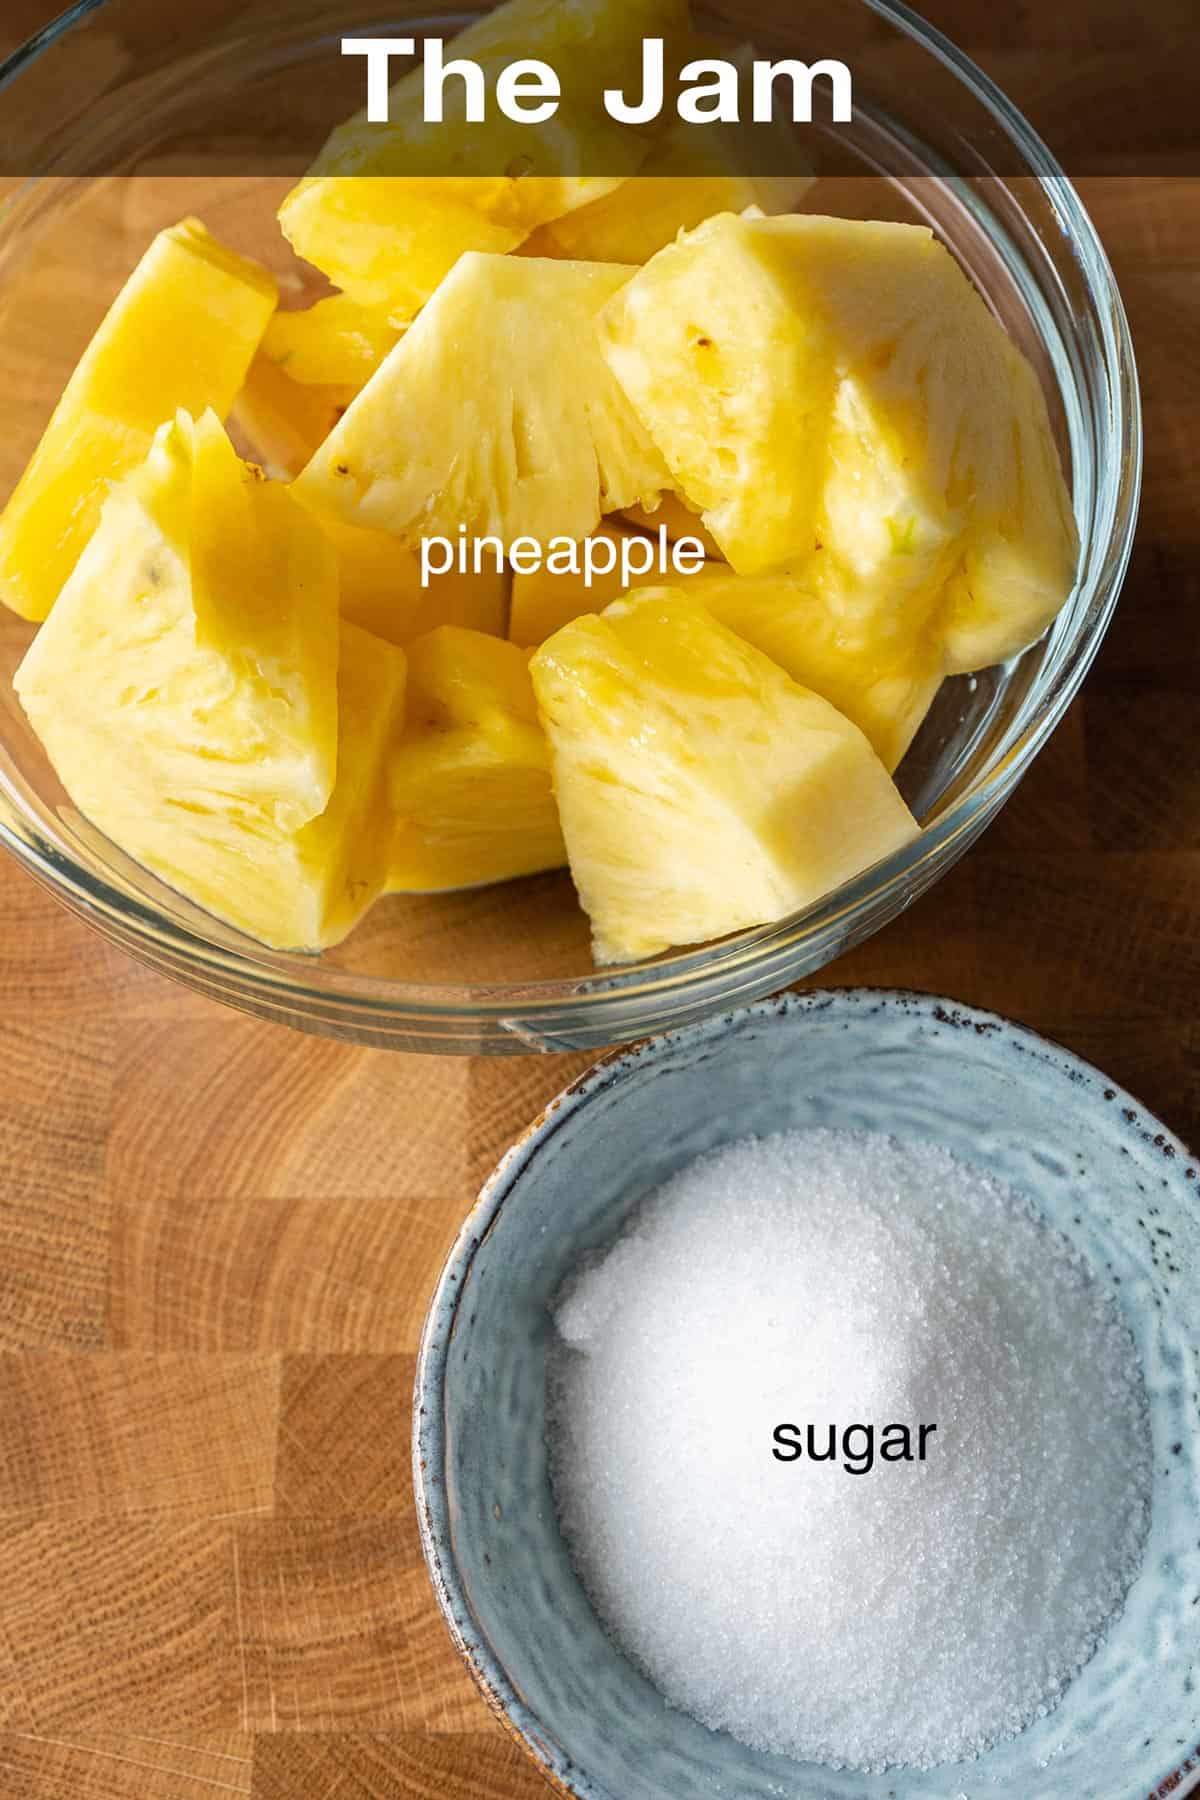 Ingredients to make Asian style pineapple jam